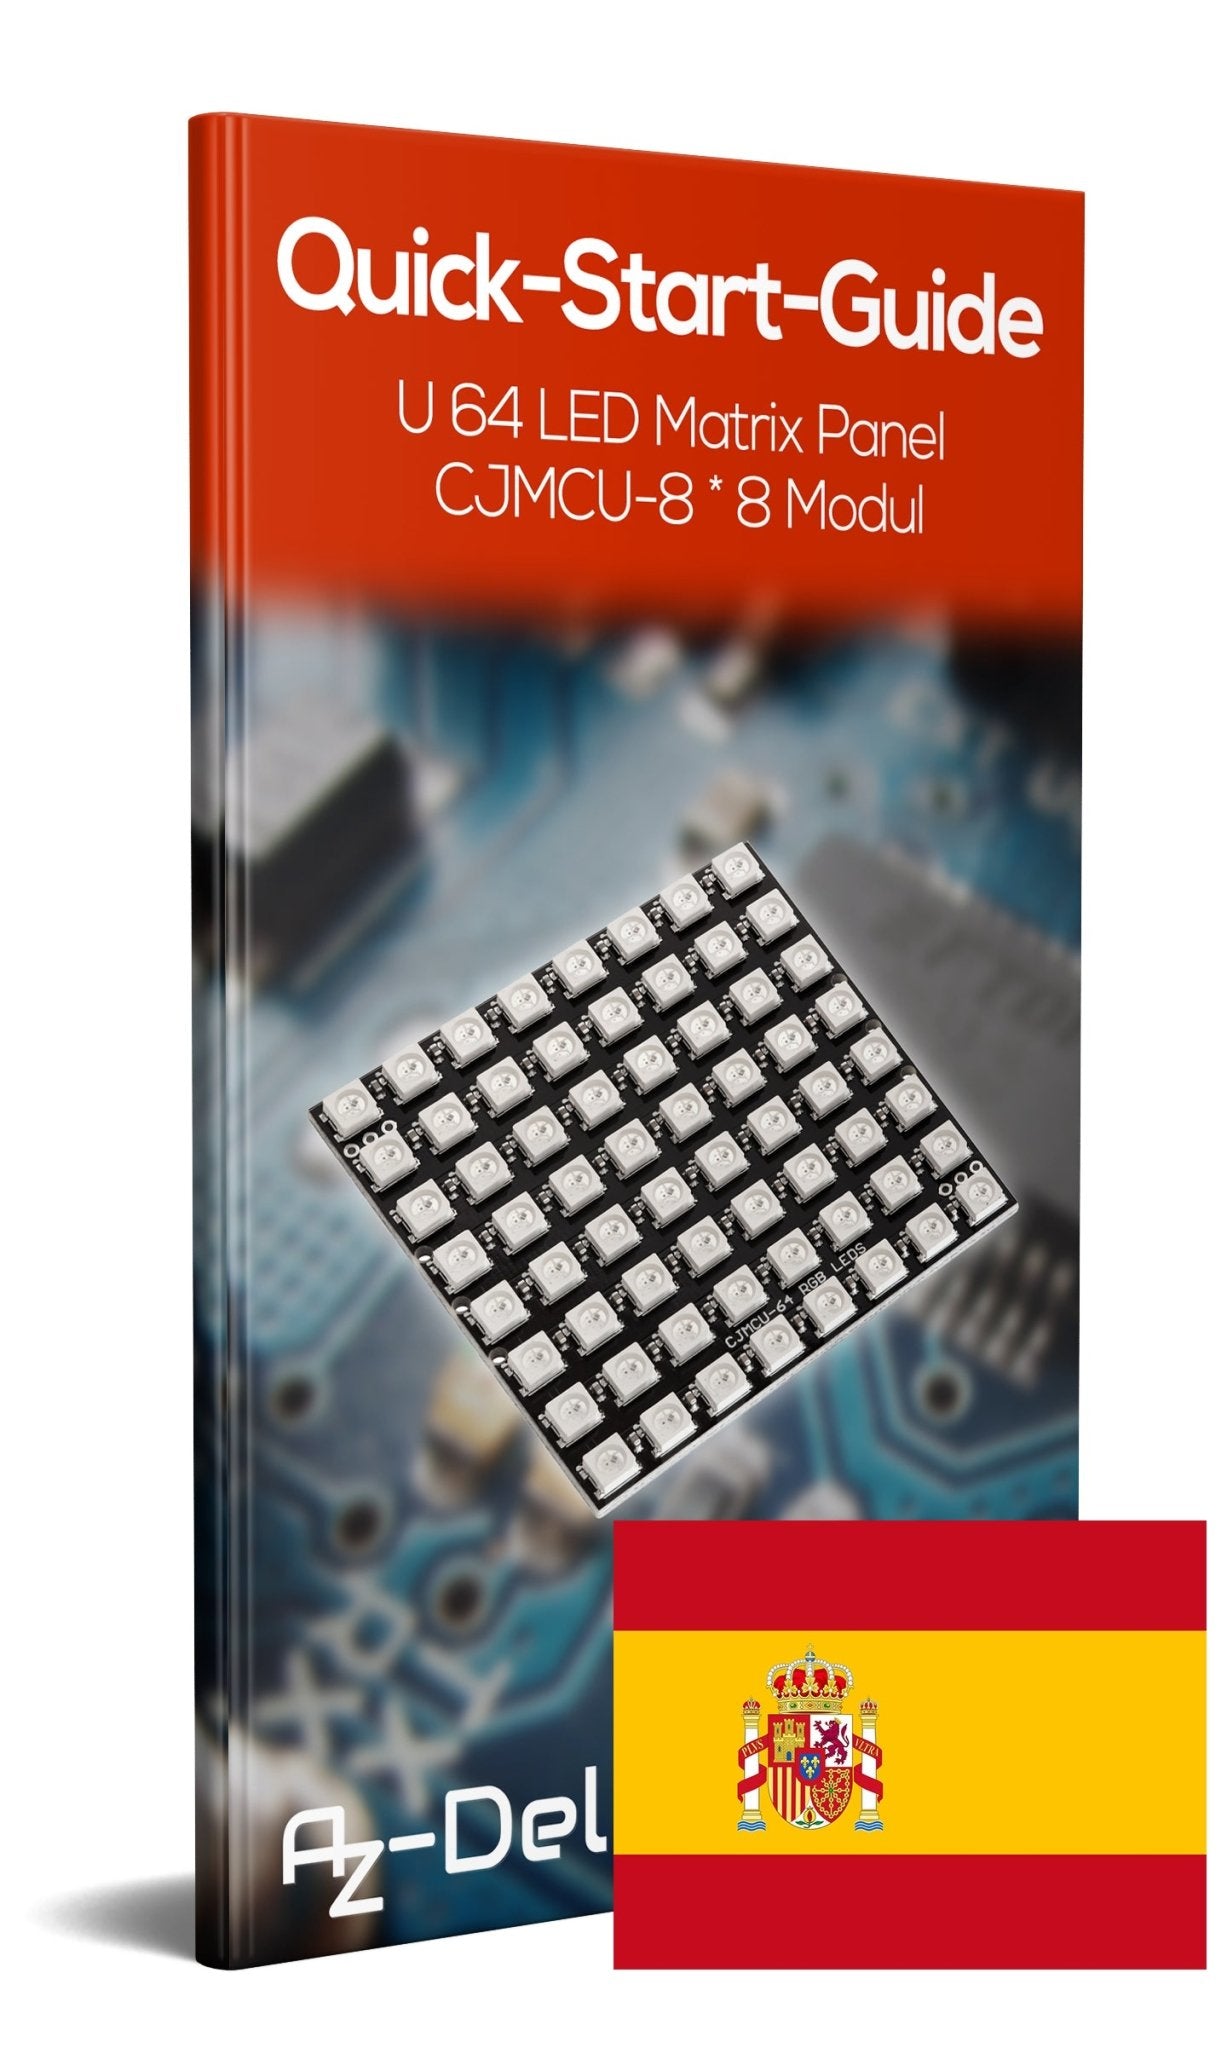 U 64 LED Matrix Panel CJMCU-8x8 Modul für Raspberry Pi - AZ-Delivery